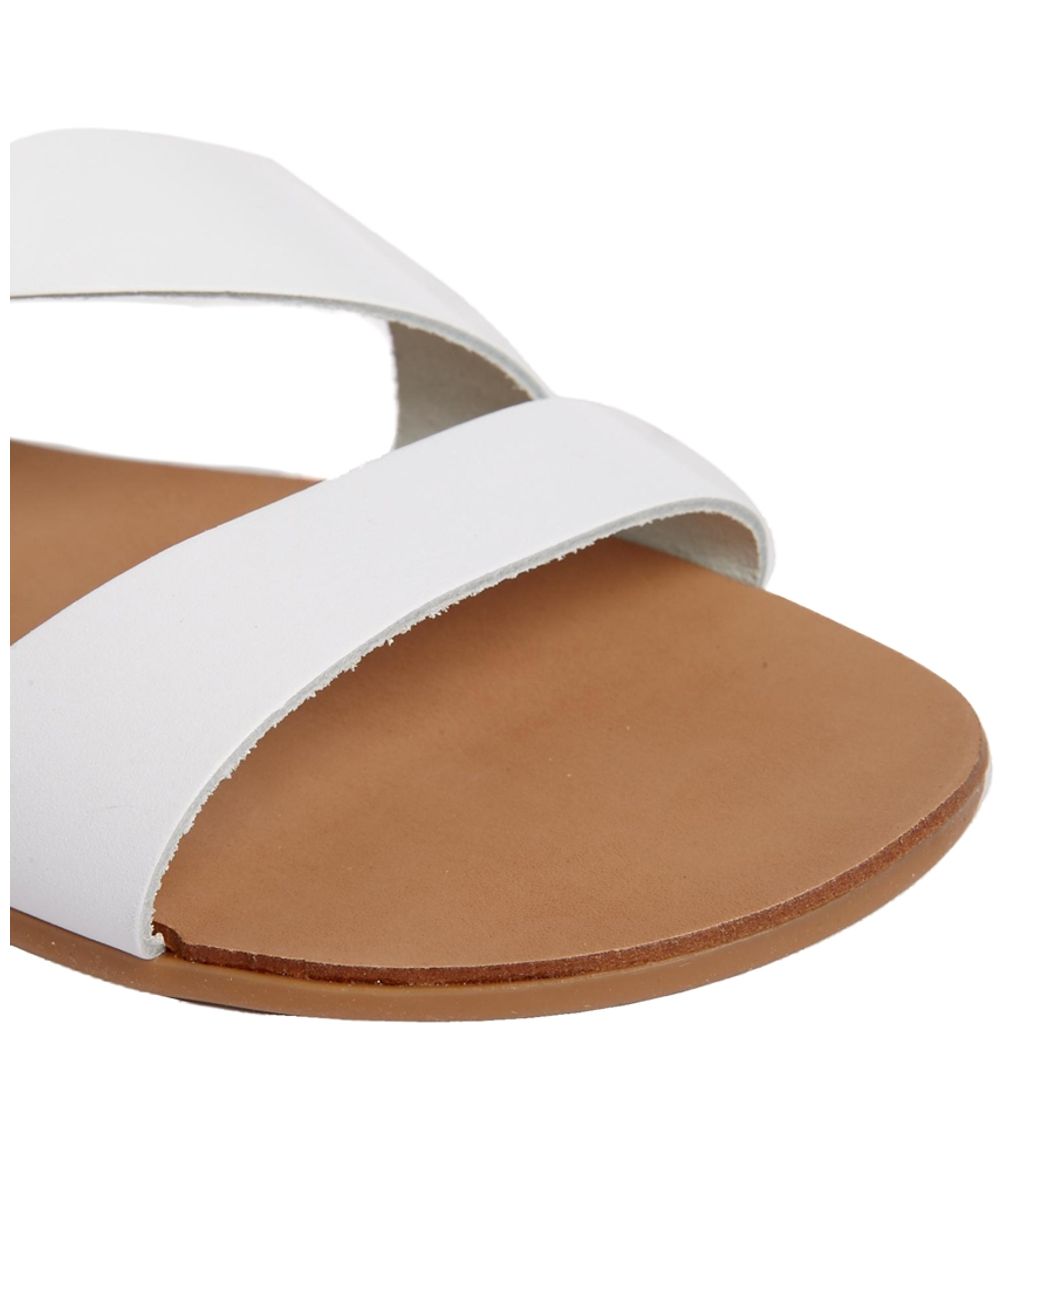 ALDO Women's Leather Asymmetric Flat Sandals